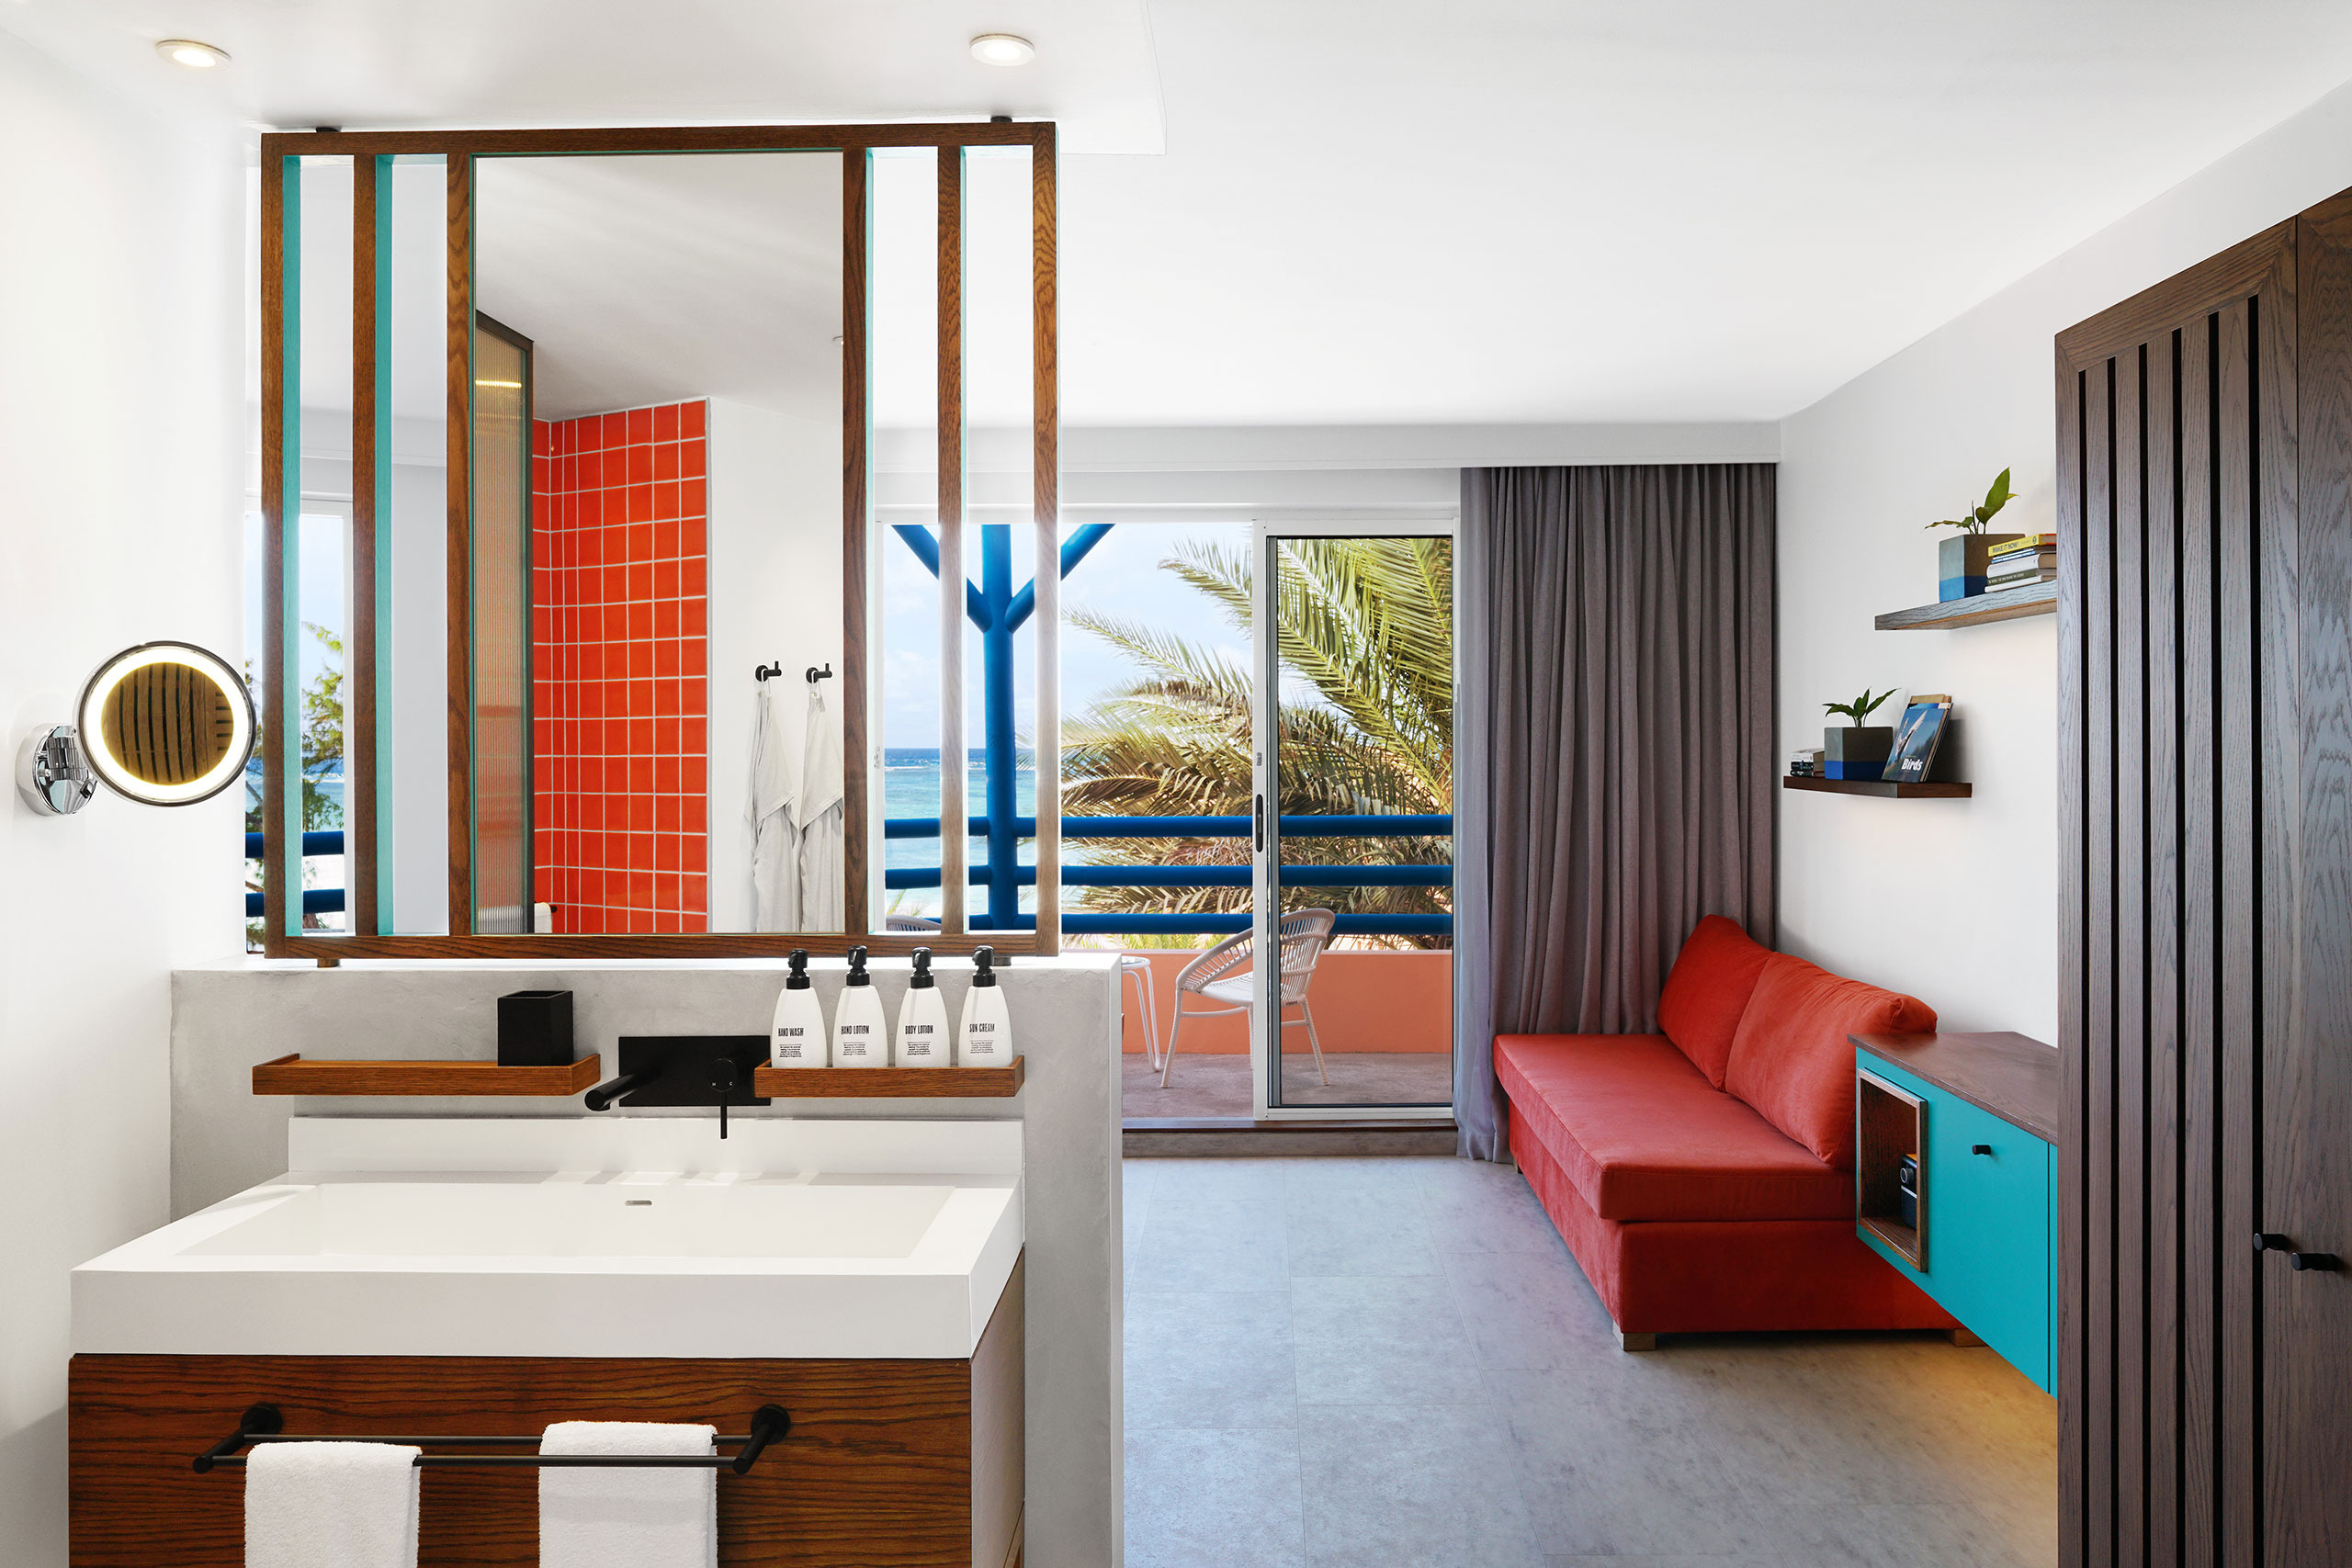 Image courtesy of Design Hotels.